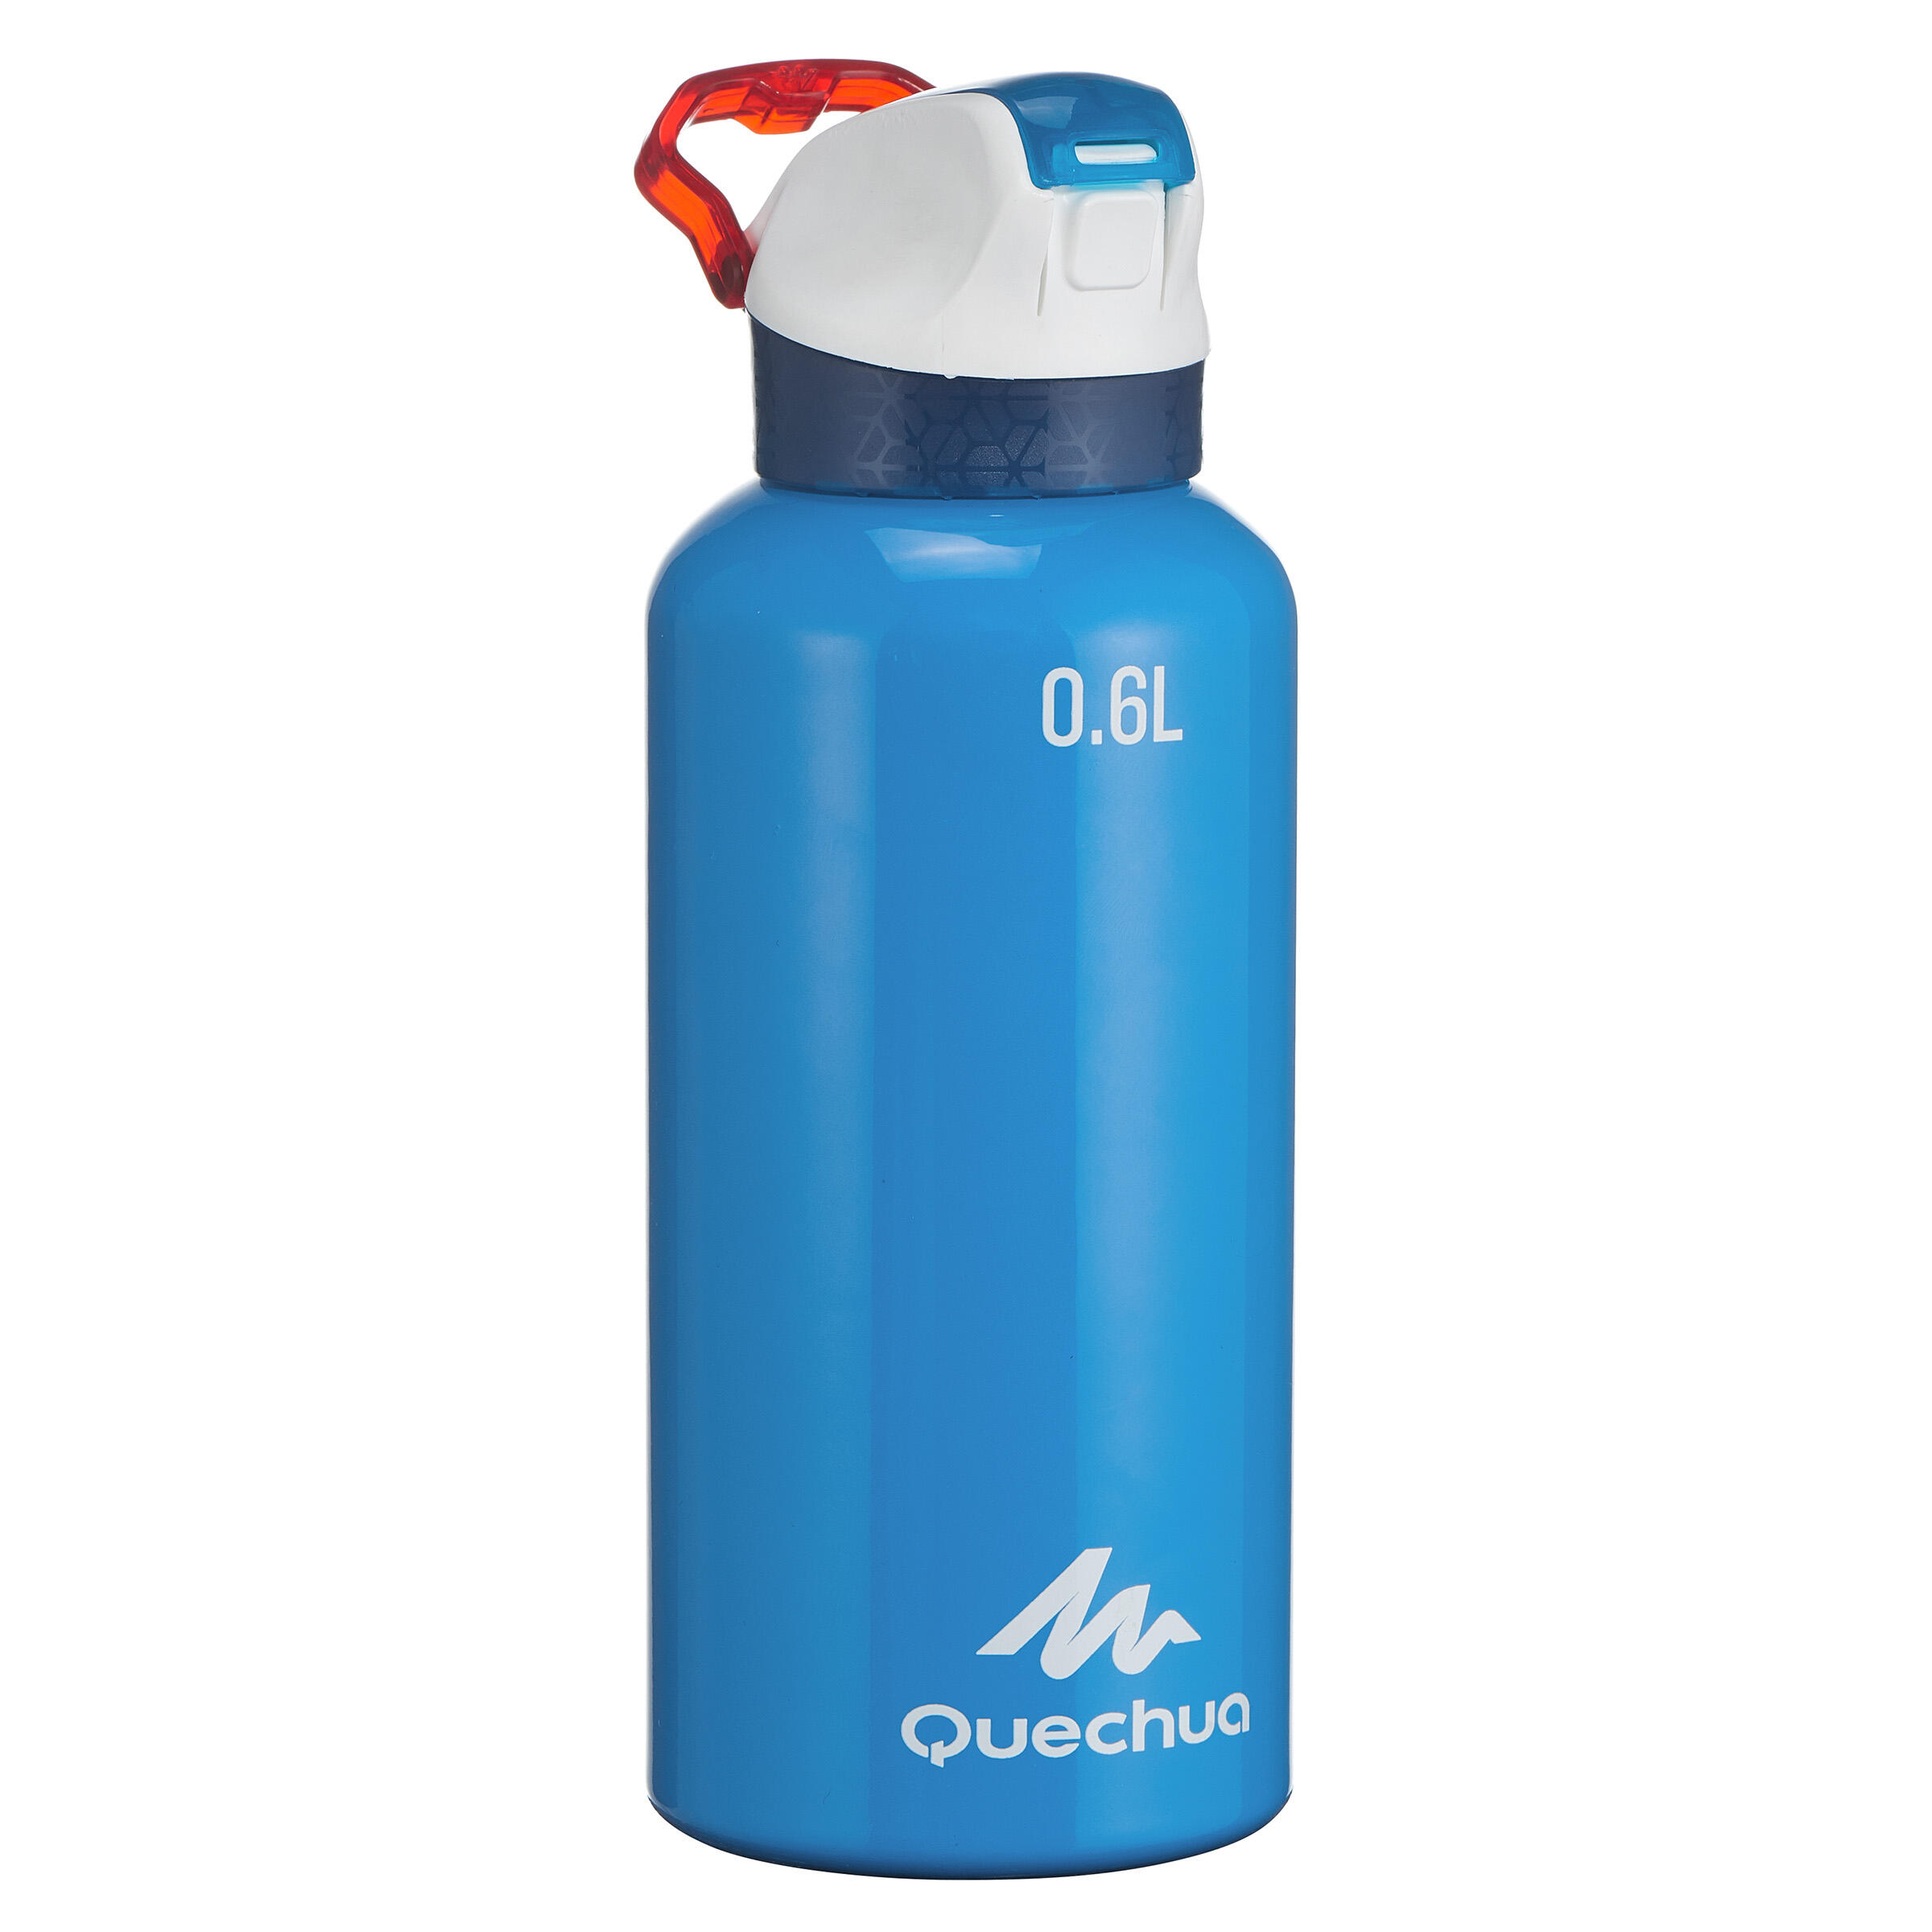 QUECHUA 0.6L Quick-Opening Aluminium Bottle - Blue